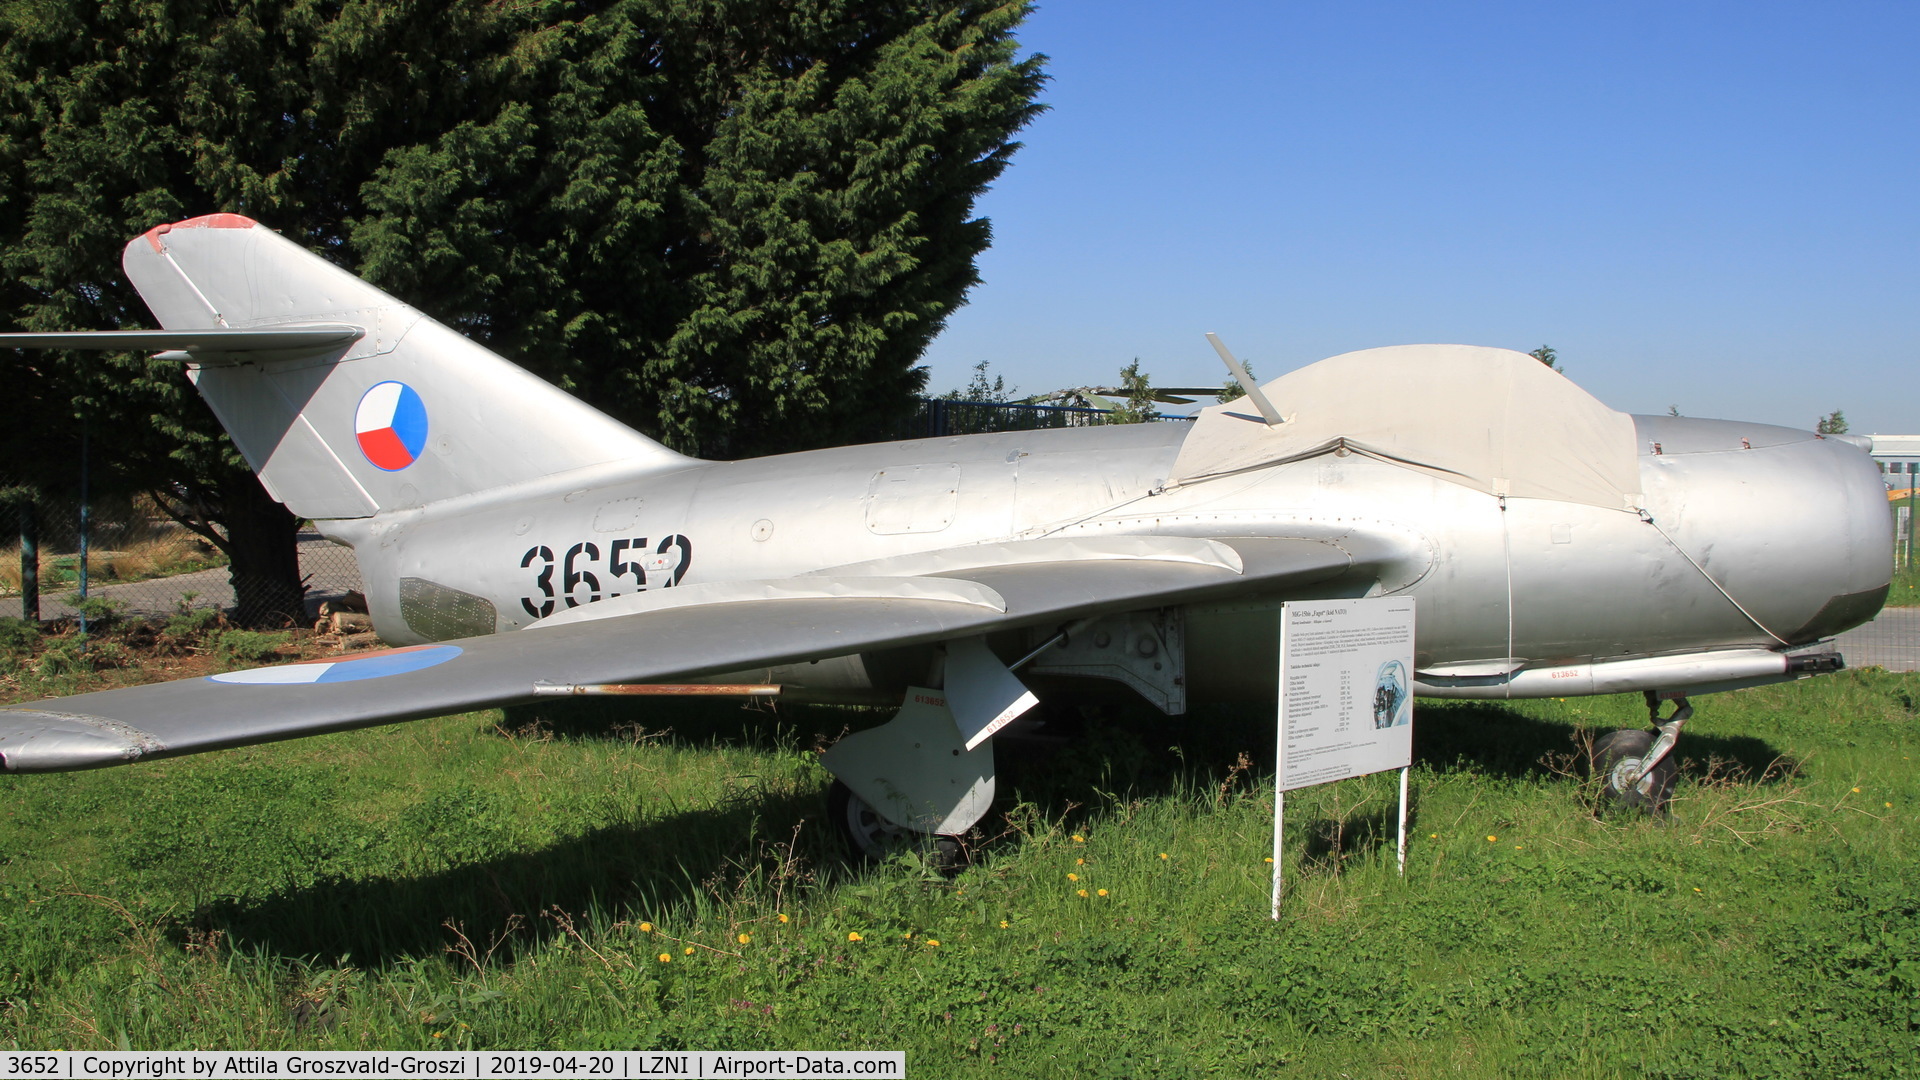 3652, Mikoyan-Gurevich MiG-15bis C/N 613652, LZNI - Nitra Airport, Slovakia